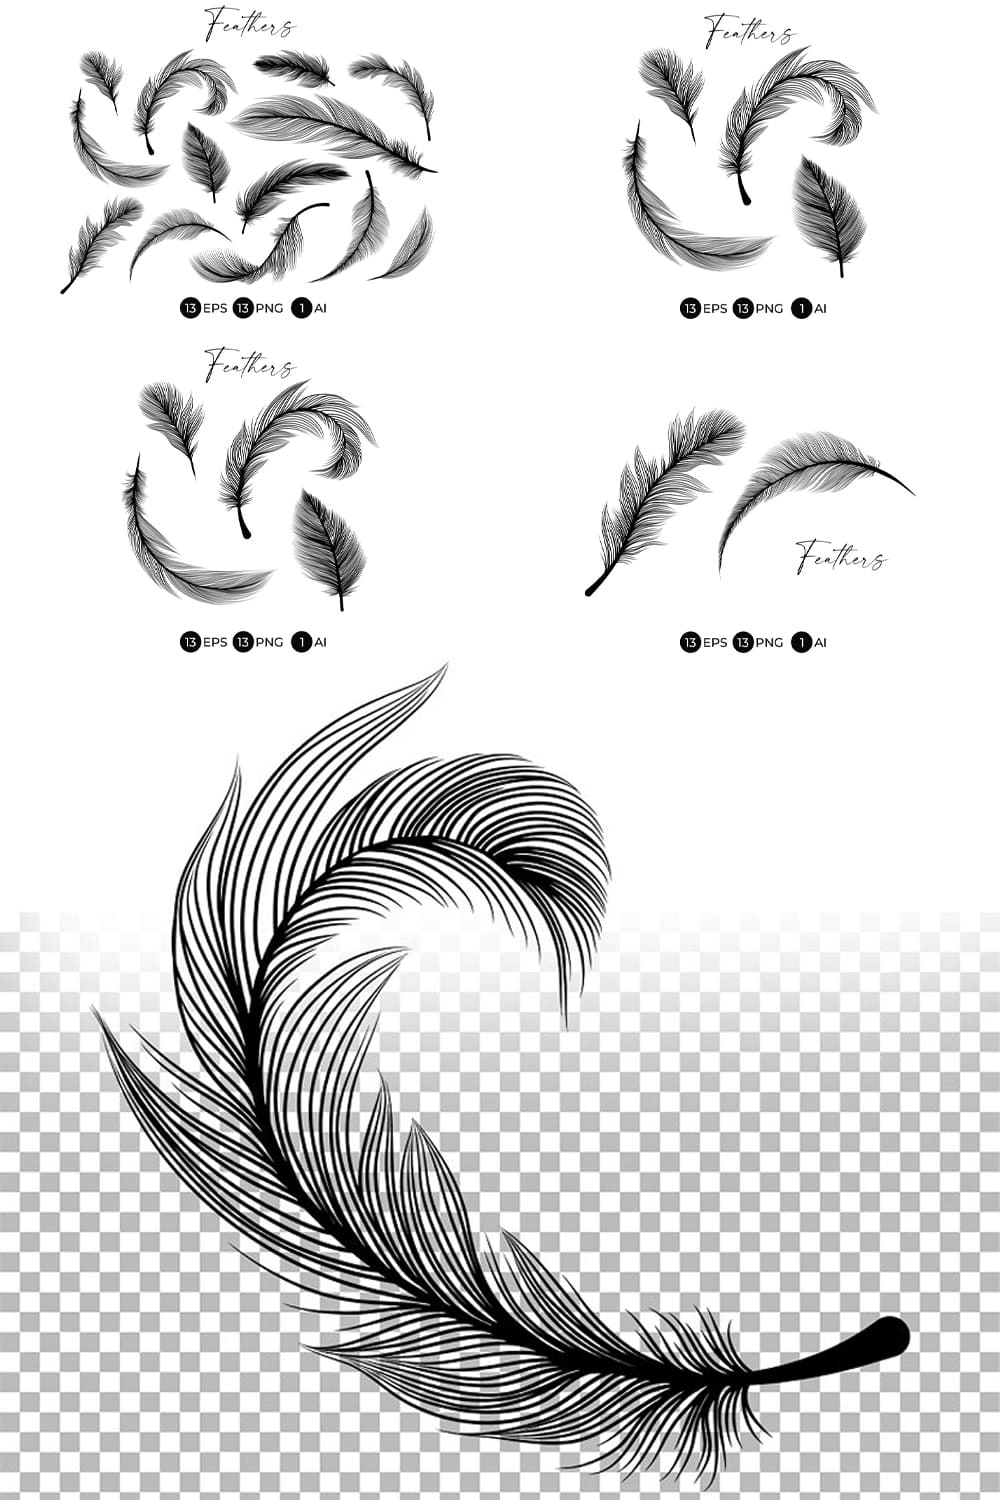 Black feathers stencil boho line art - pinterest image preview.